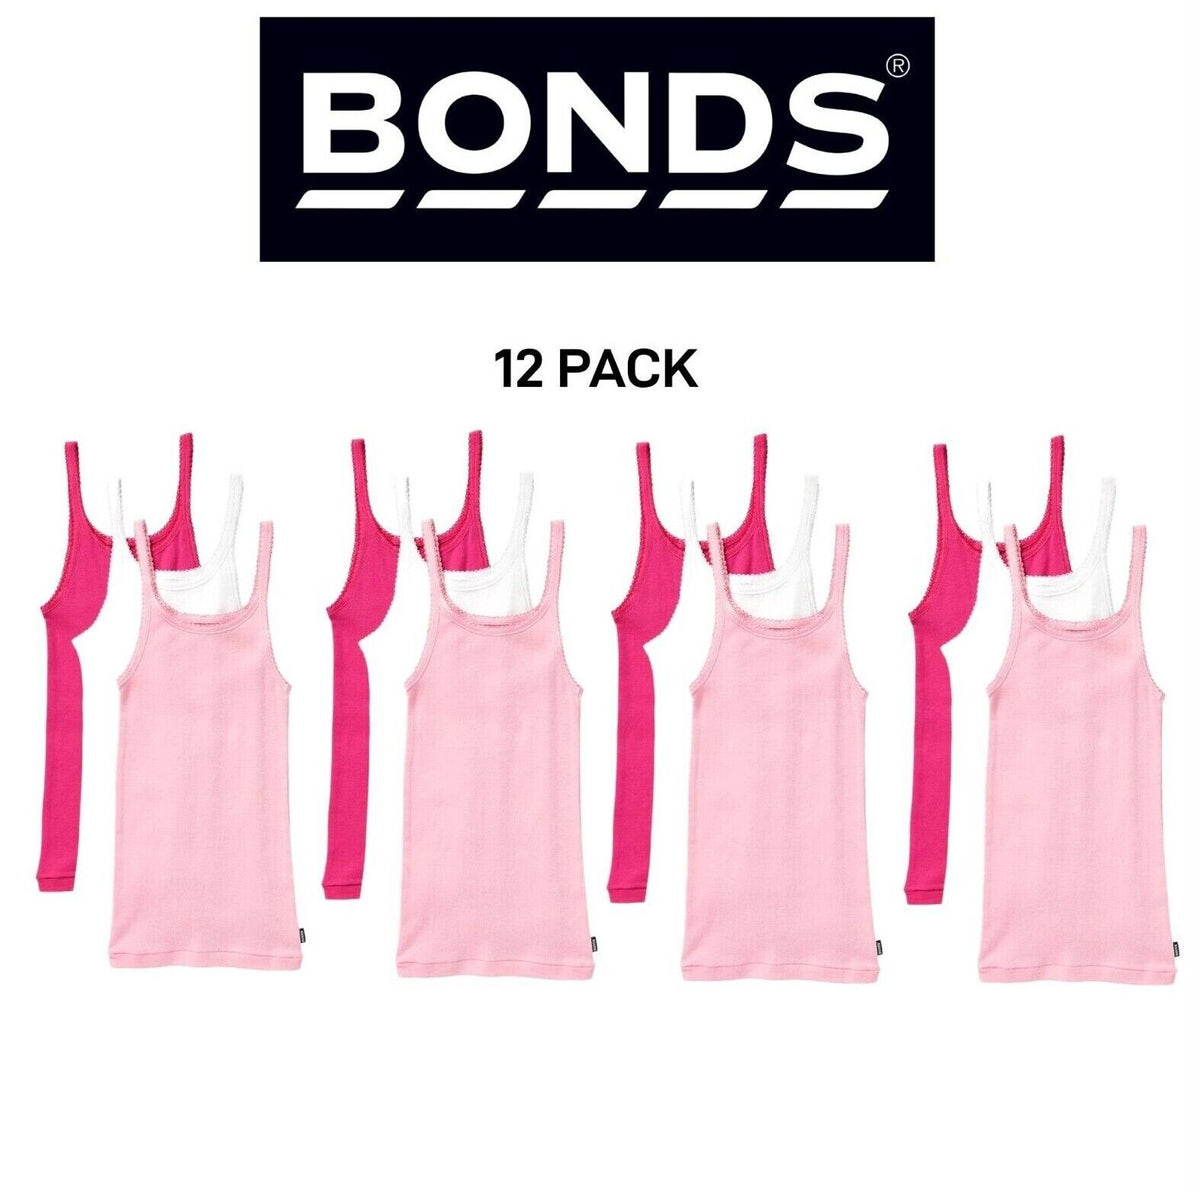 Bonds Girls Teena Singlet Super Soft Cotton Comfortable Top 12 Pack UYG43W